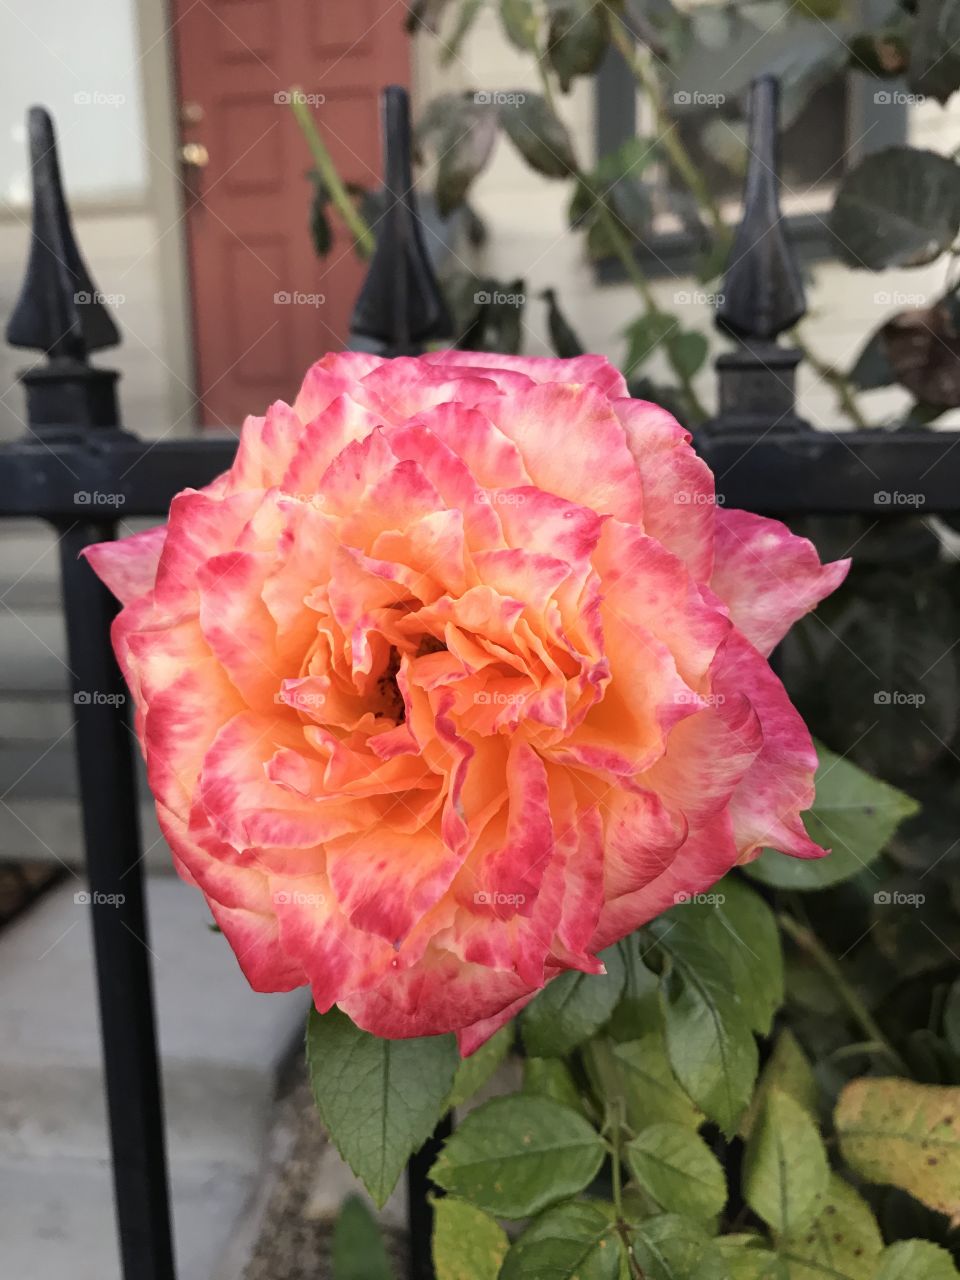 Garden rose orange and pink